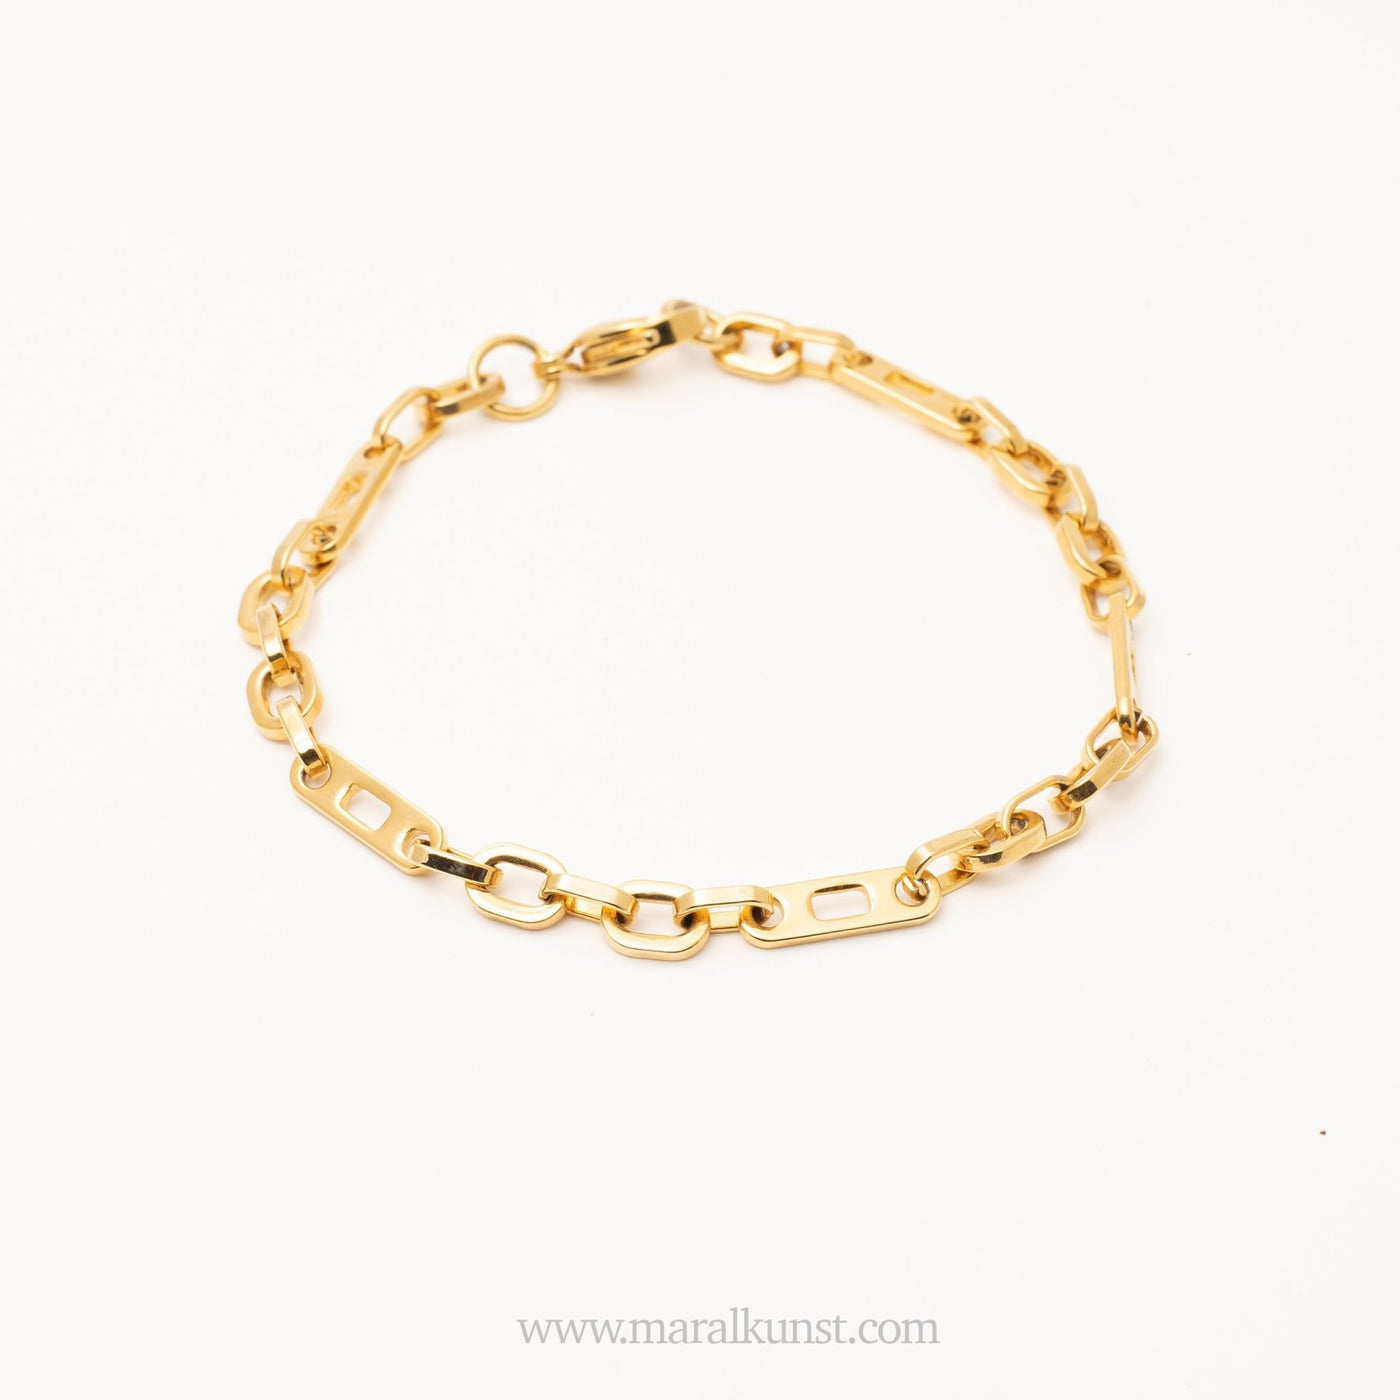 Lou Gold Chain Bracelet - Maral Kunst Jewelry